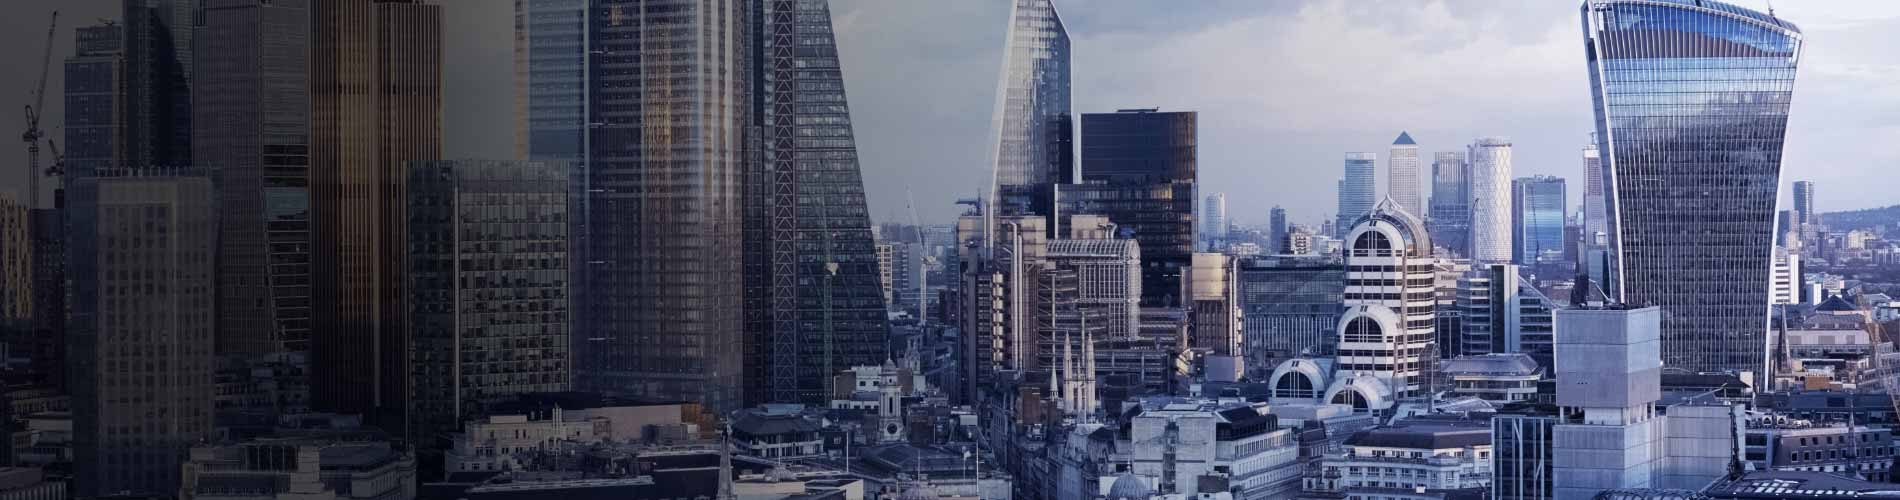 Skyline image of London buildings